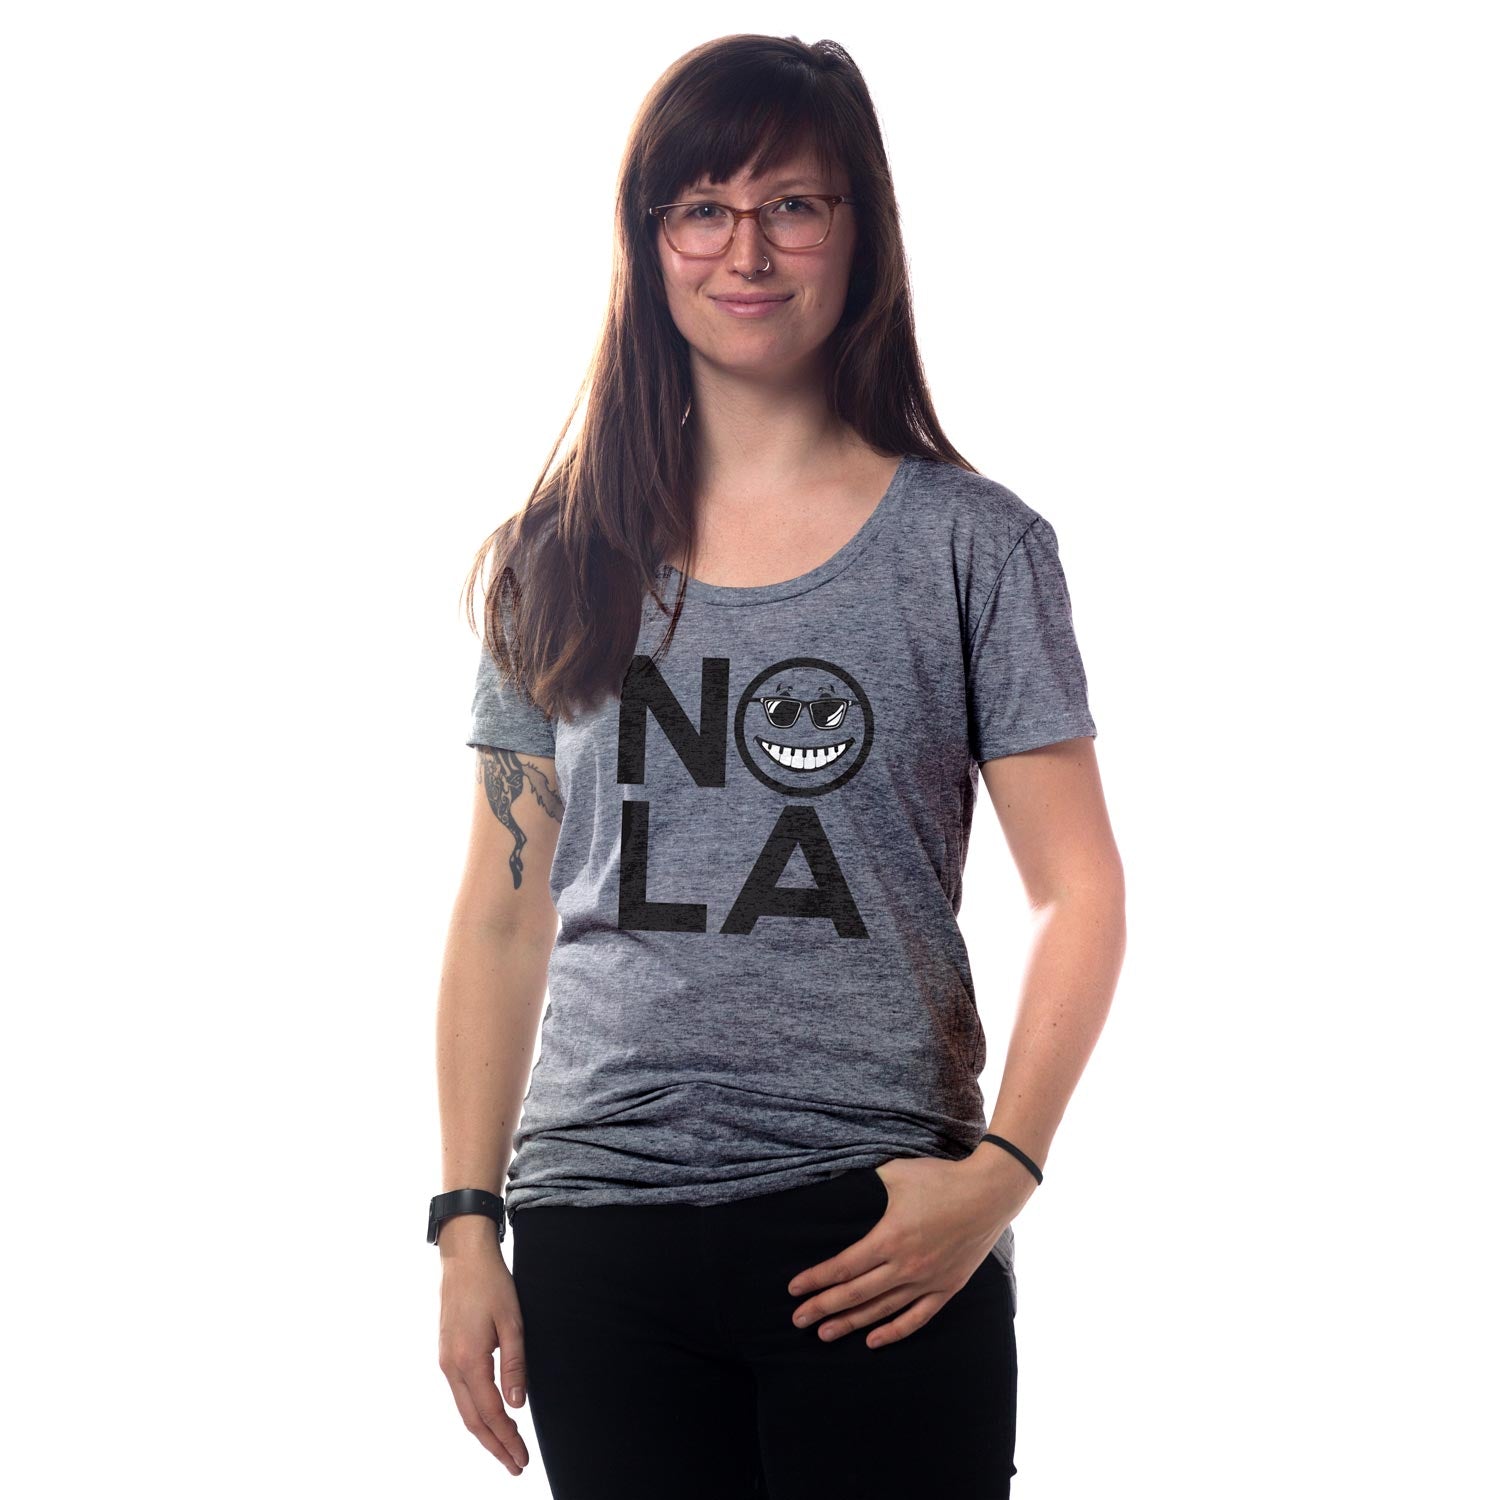 Women's NOLA Smile T-shirt